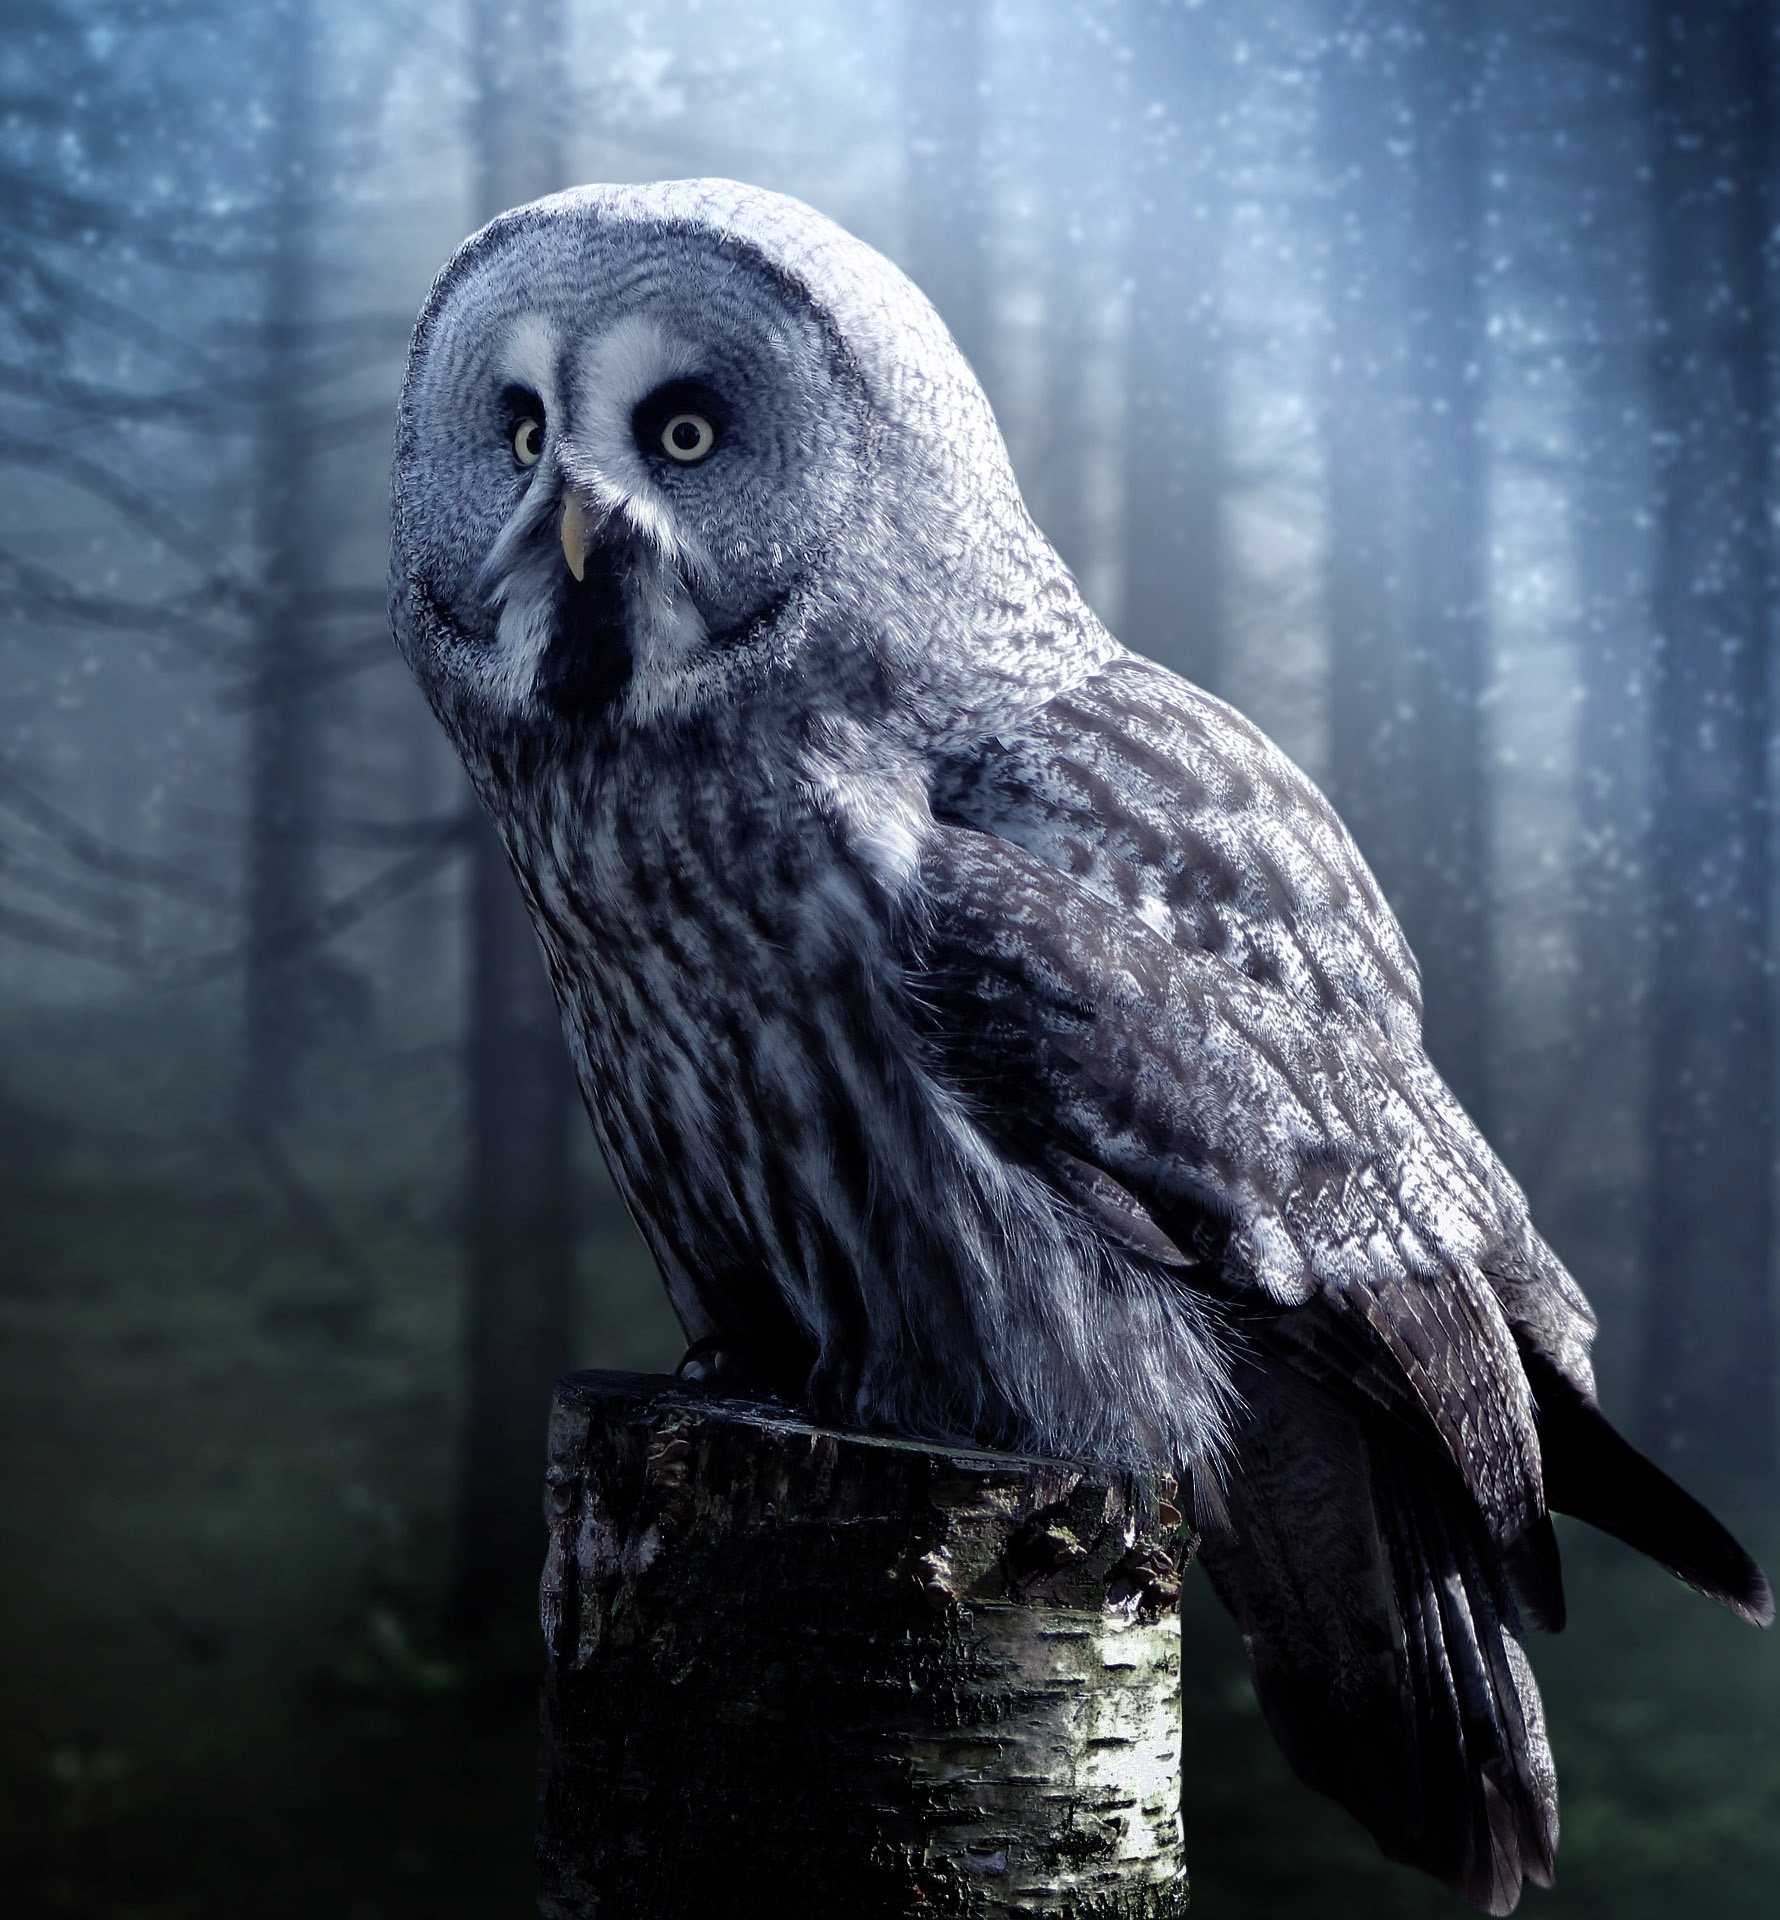 Portrait of an Owl